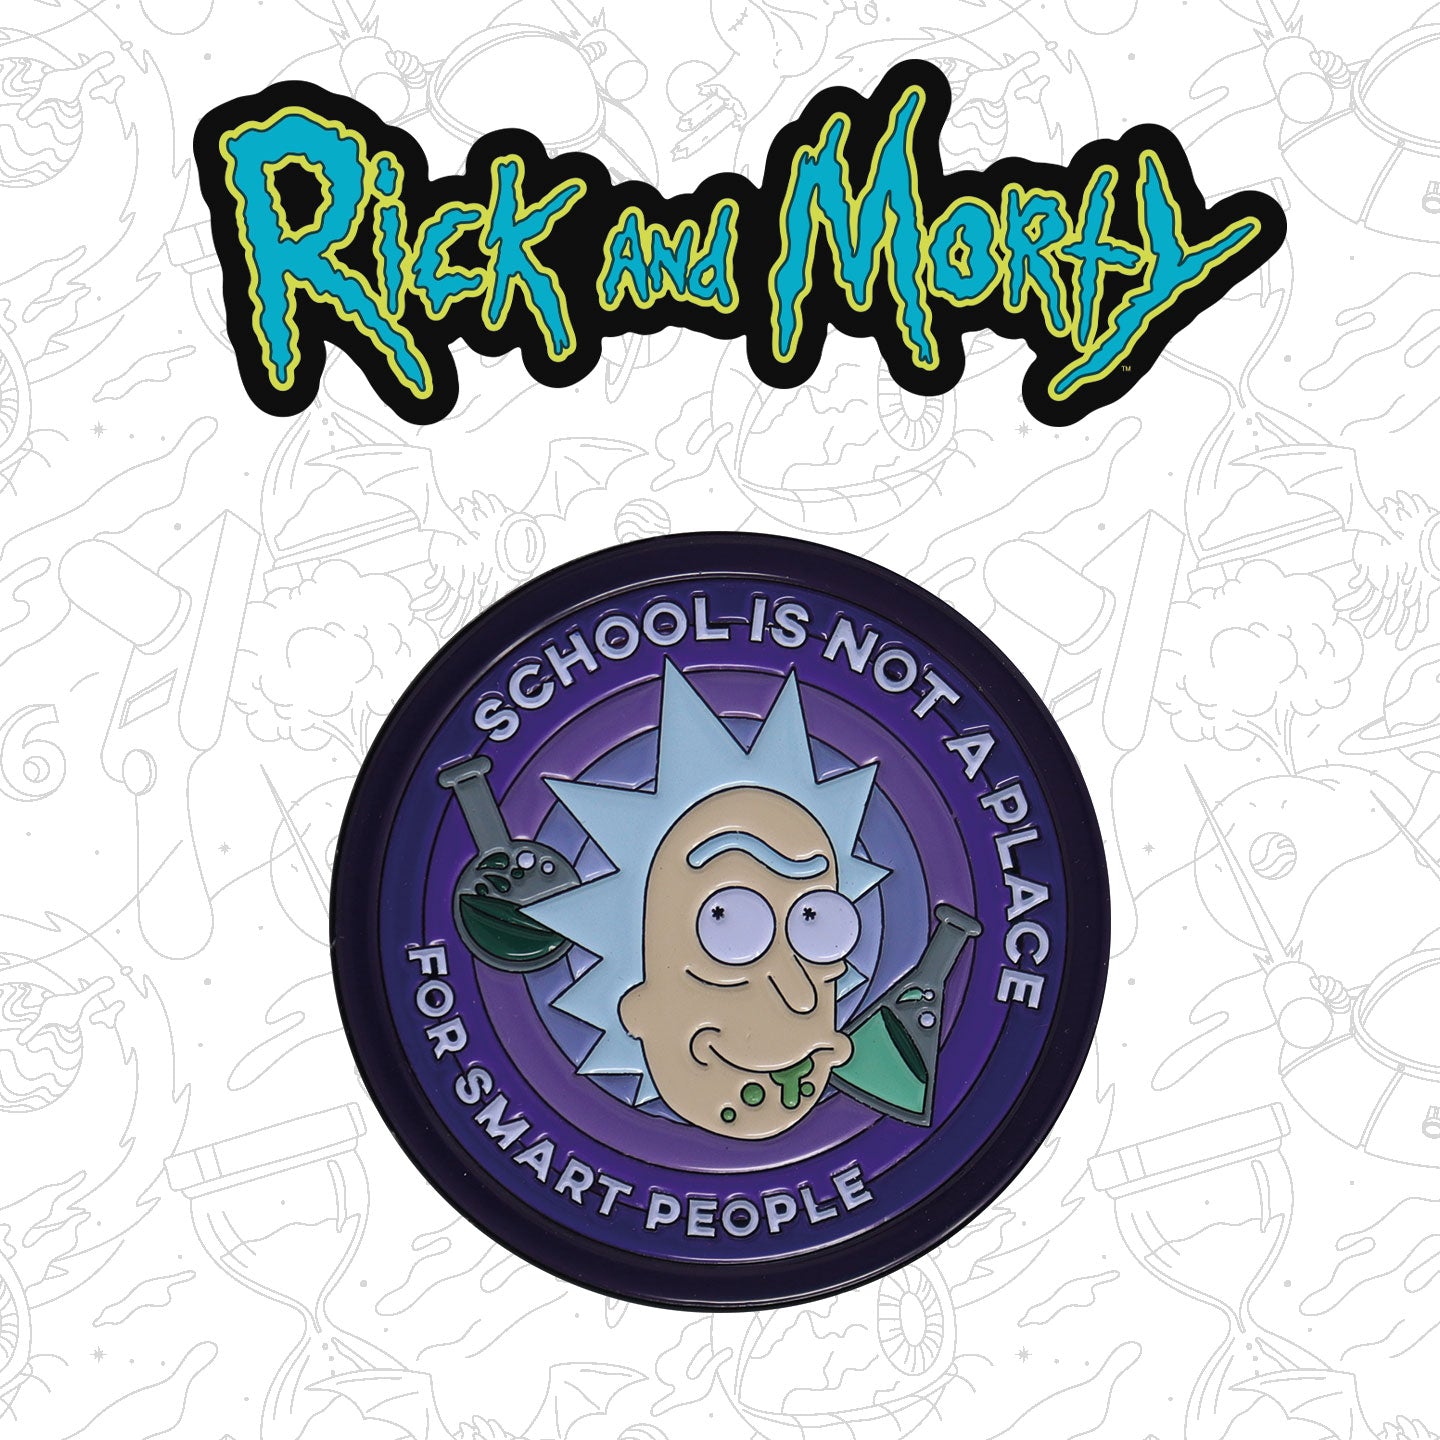 Rick & Morty Limited Edition Pin Badge